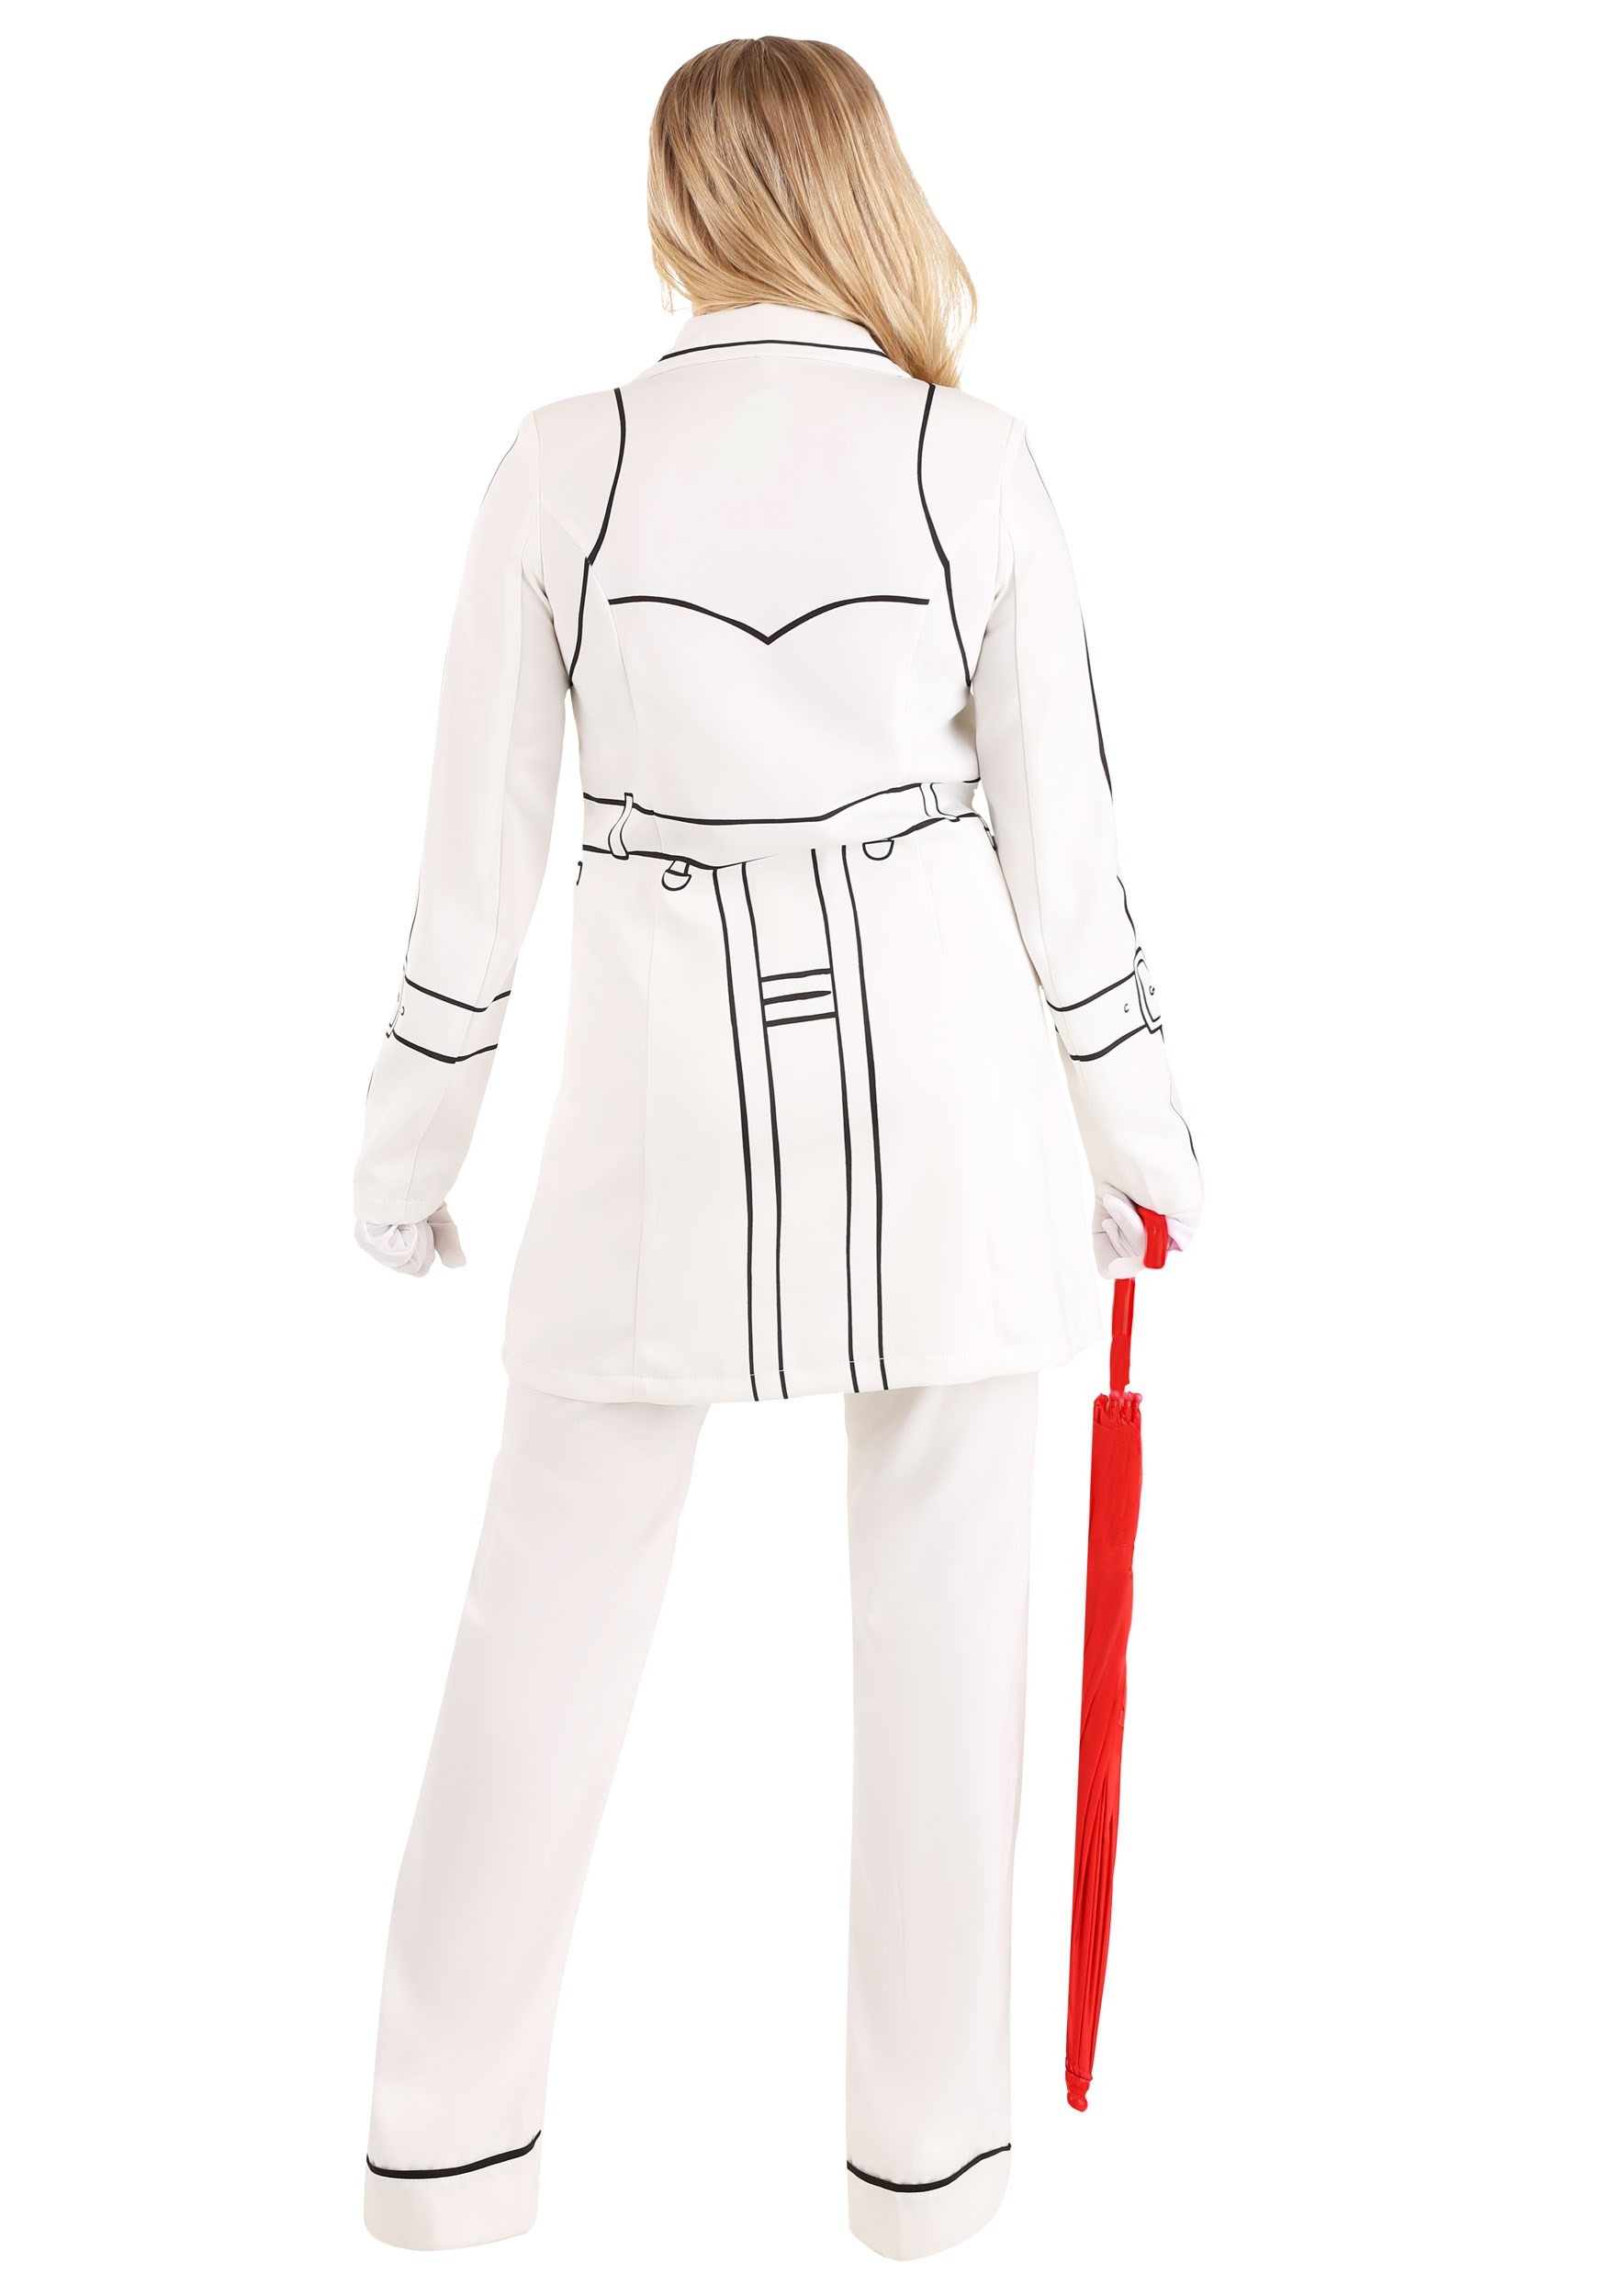 Kill Bill Elle Driver Trench Coat Costume For Women